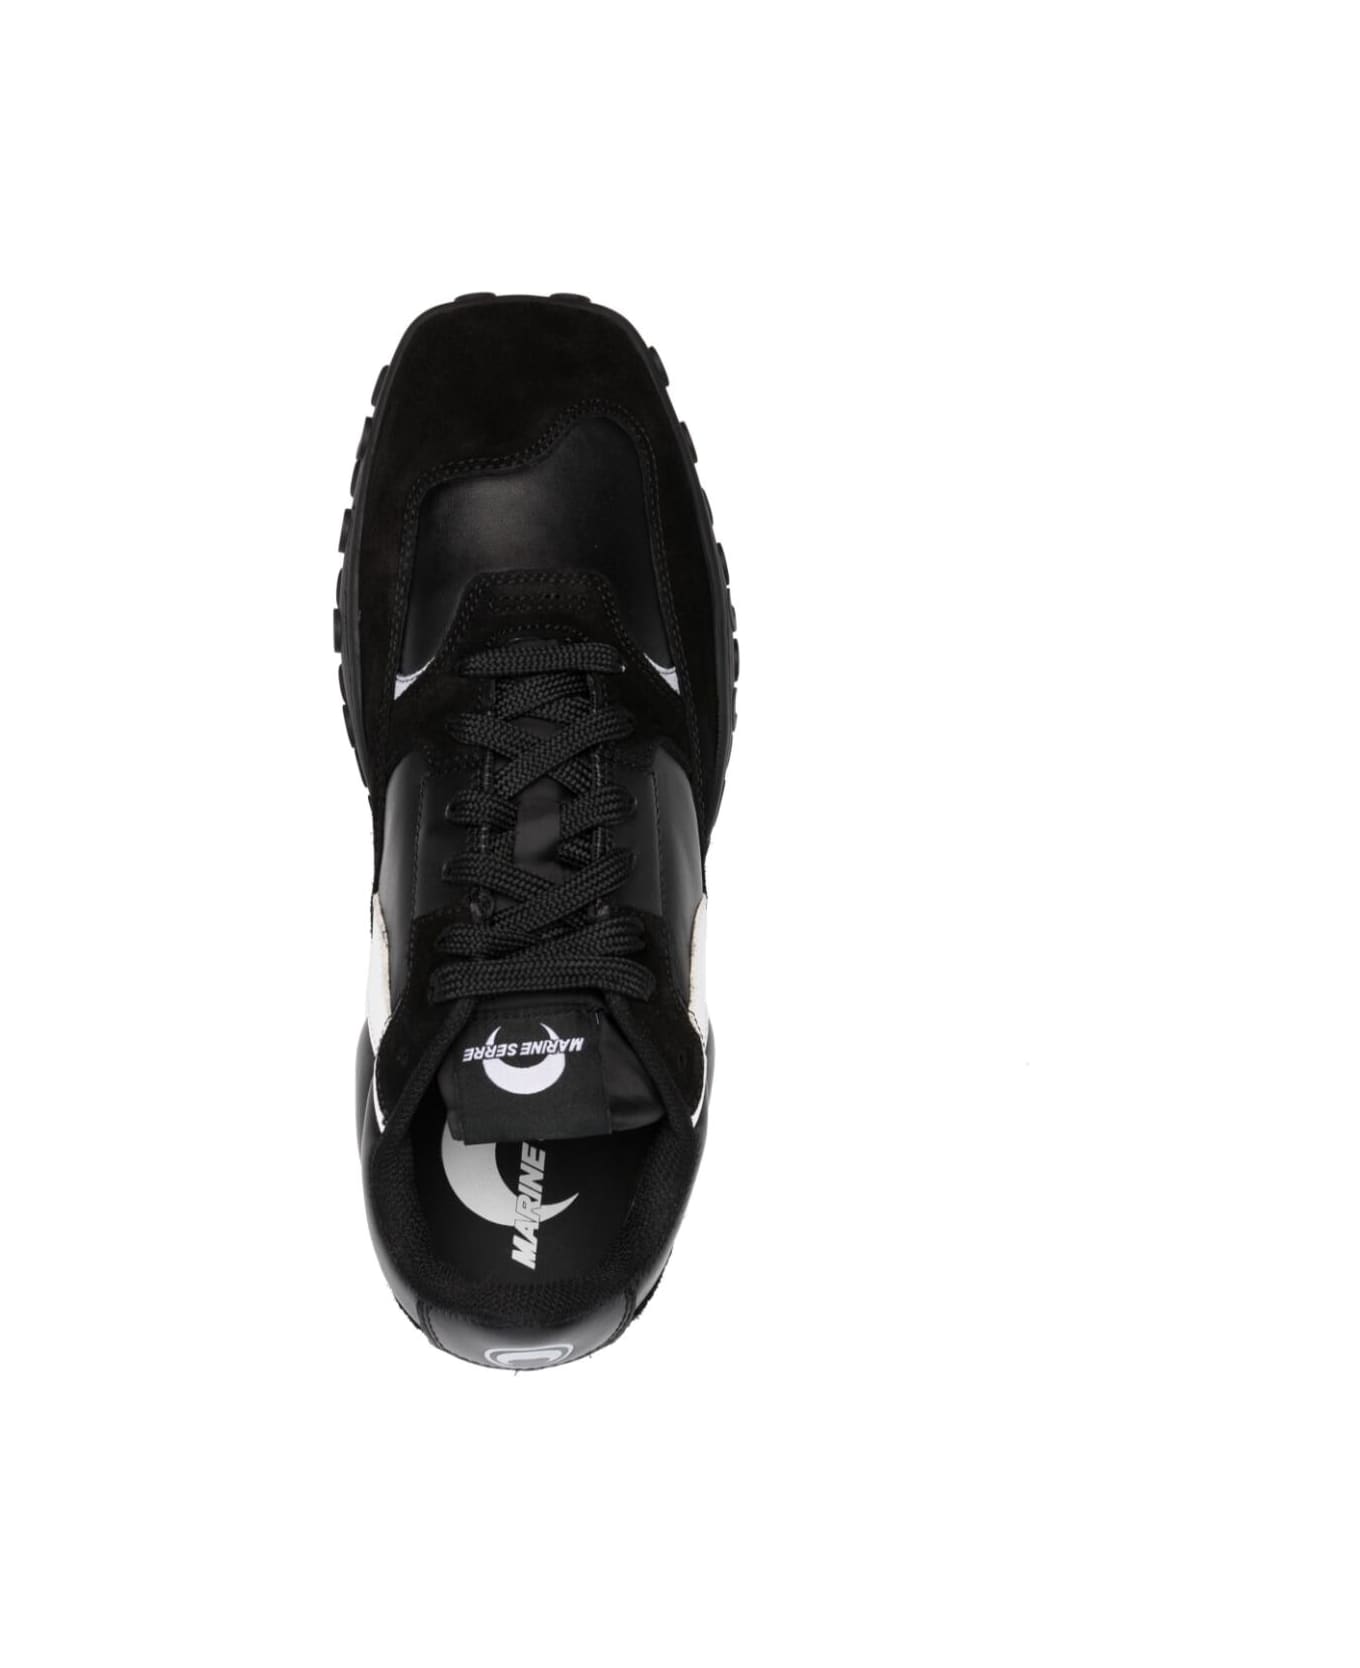 Marine Serre 'moonwalk' Black Low Top Sneakers With Logo Print And Suede Details In Leather Man - Black